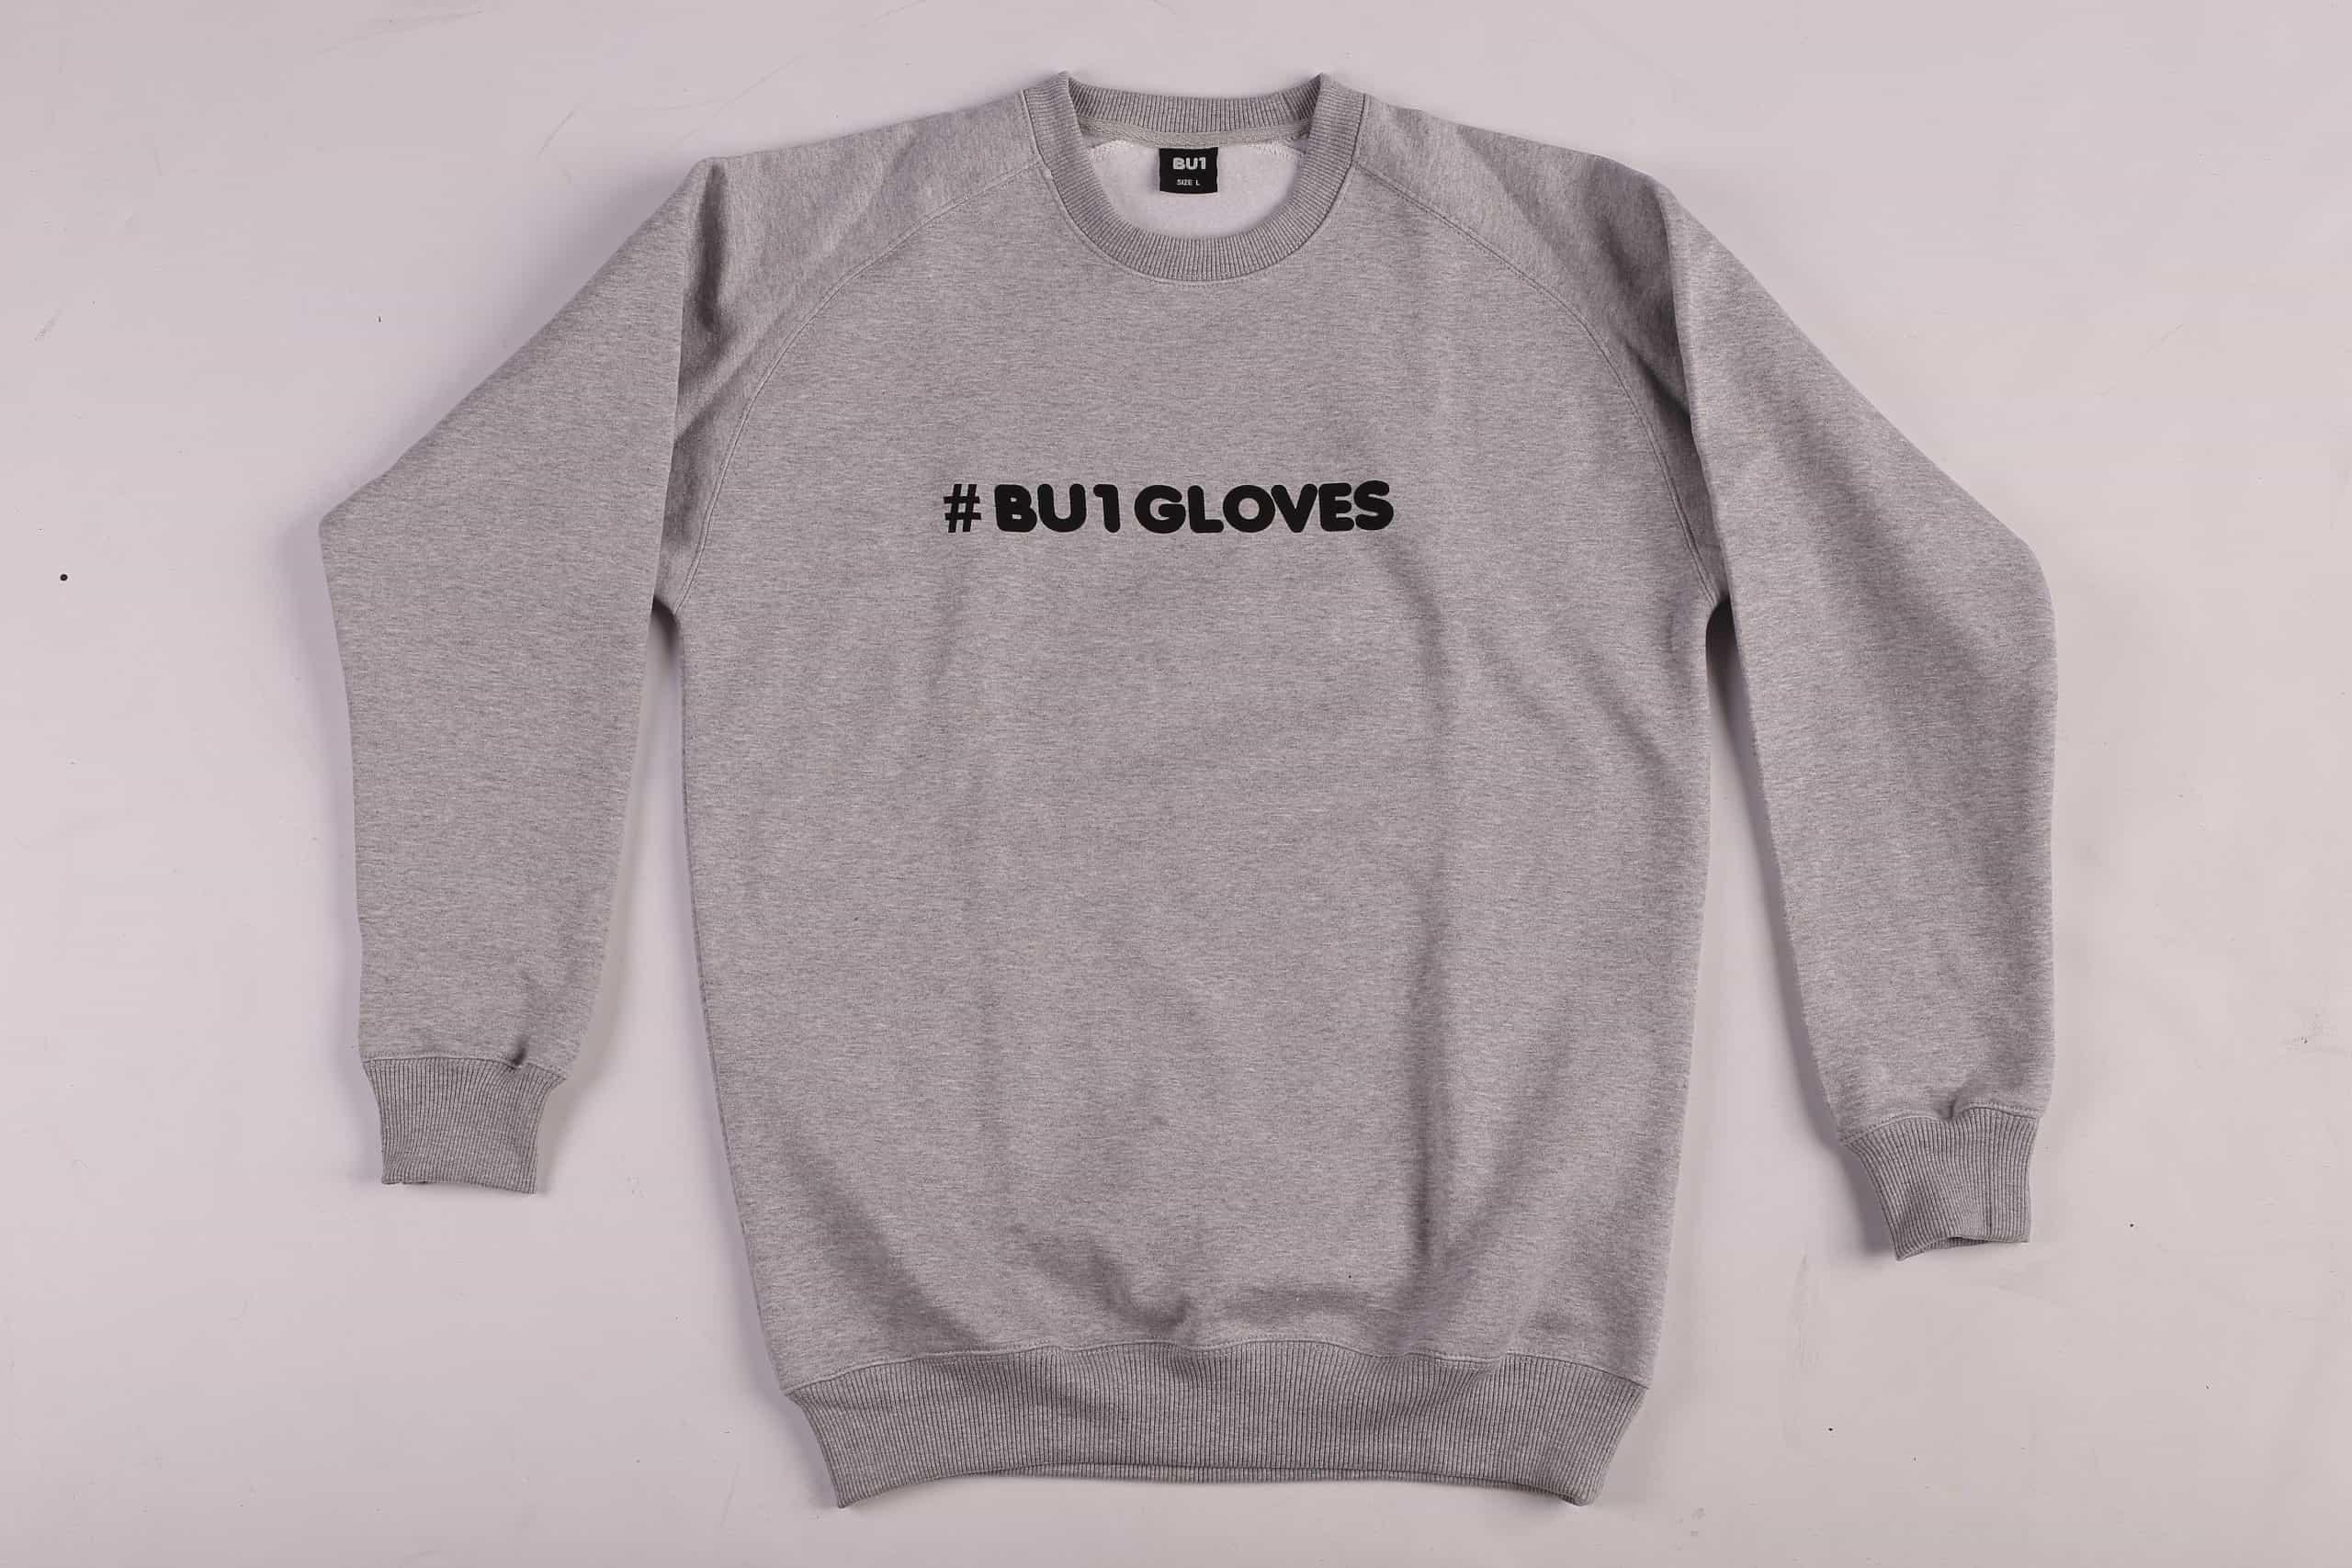 BU1 pulóver szürke #BU1GLOVES